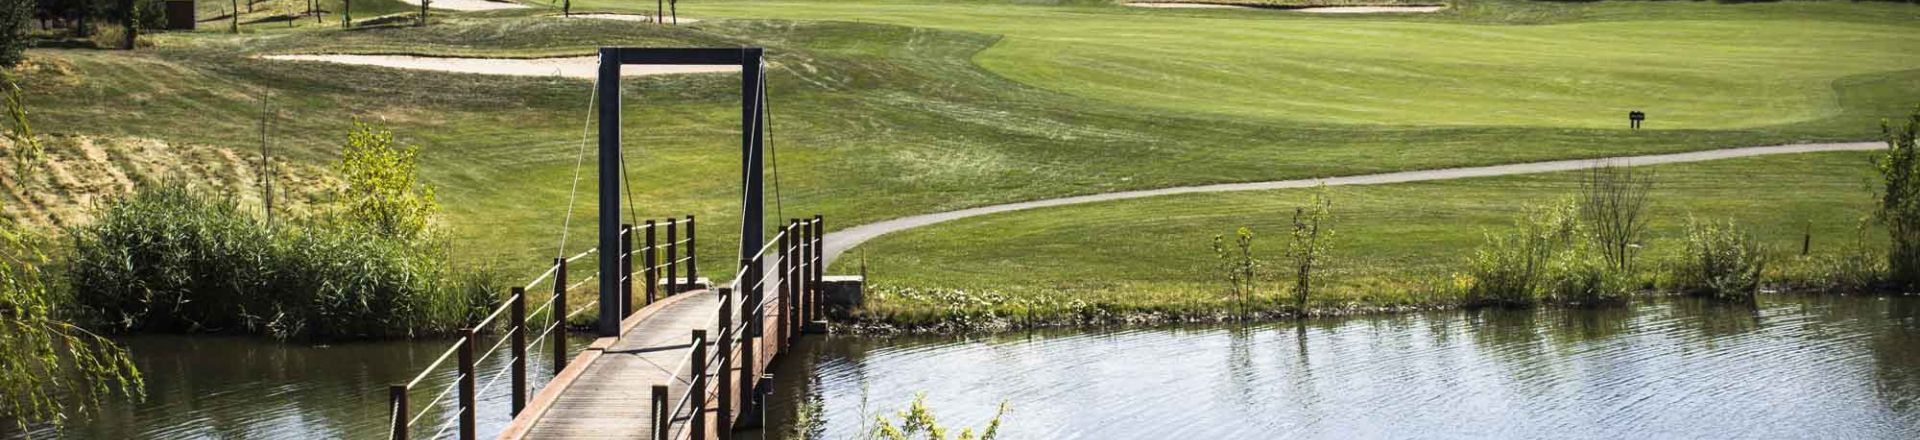 Black Bridge Golf Course